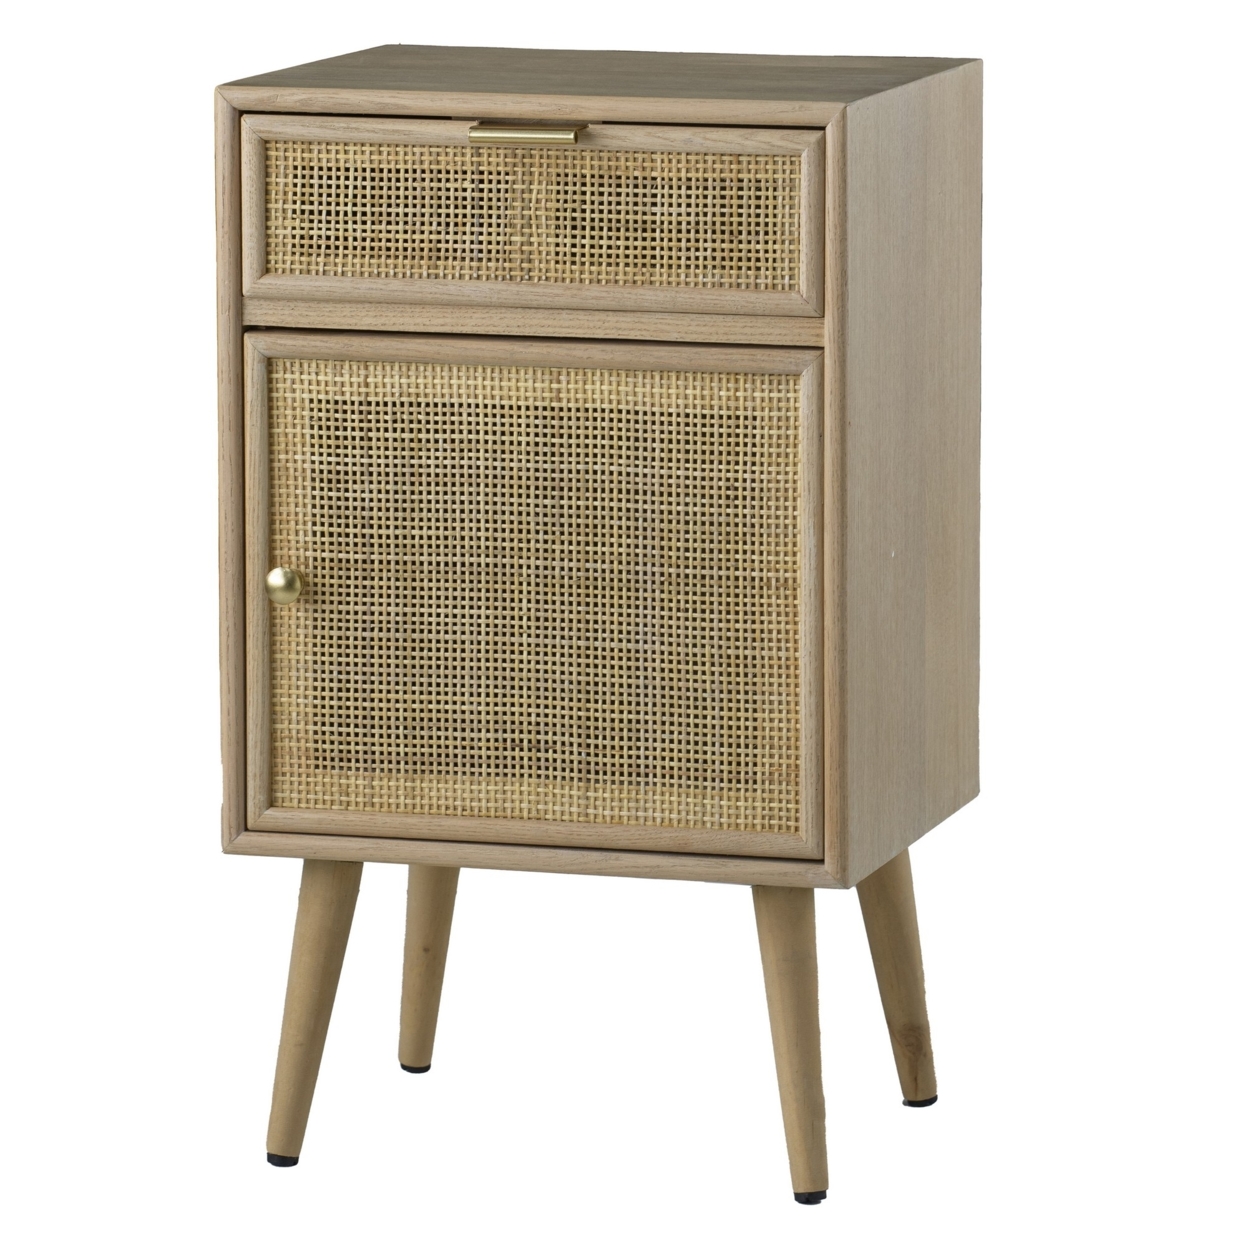 Keli 28 Inch Accent Cabinet, 1 Drawer, Pine, Woven Rattan Design, Natural, Saltoro Sherpi